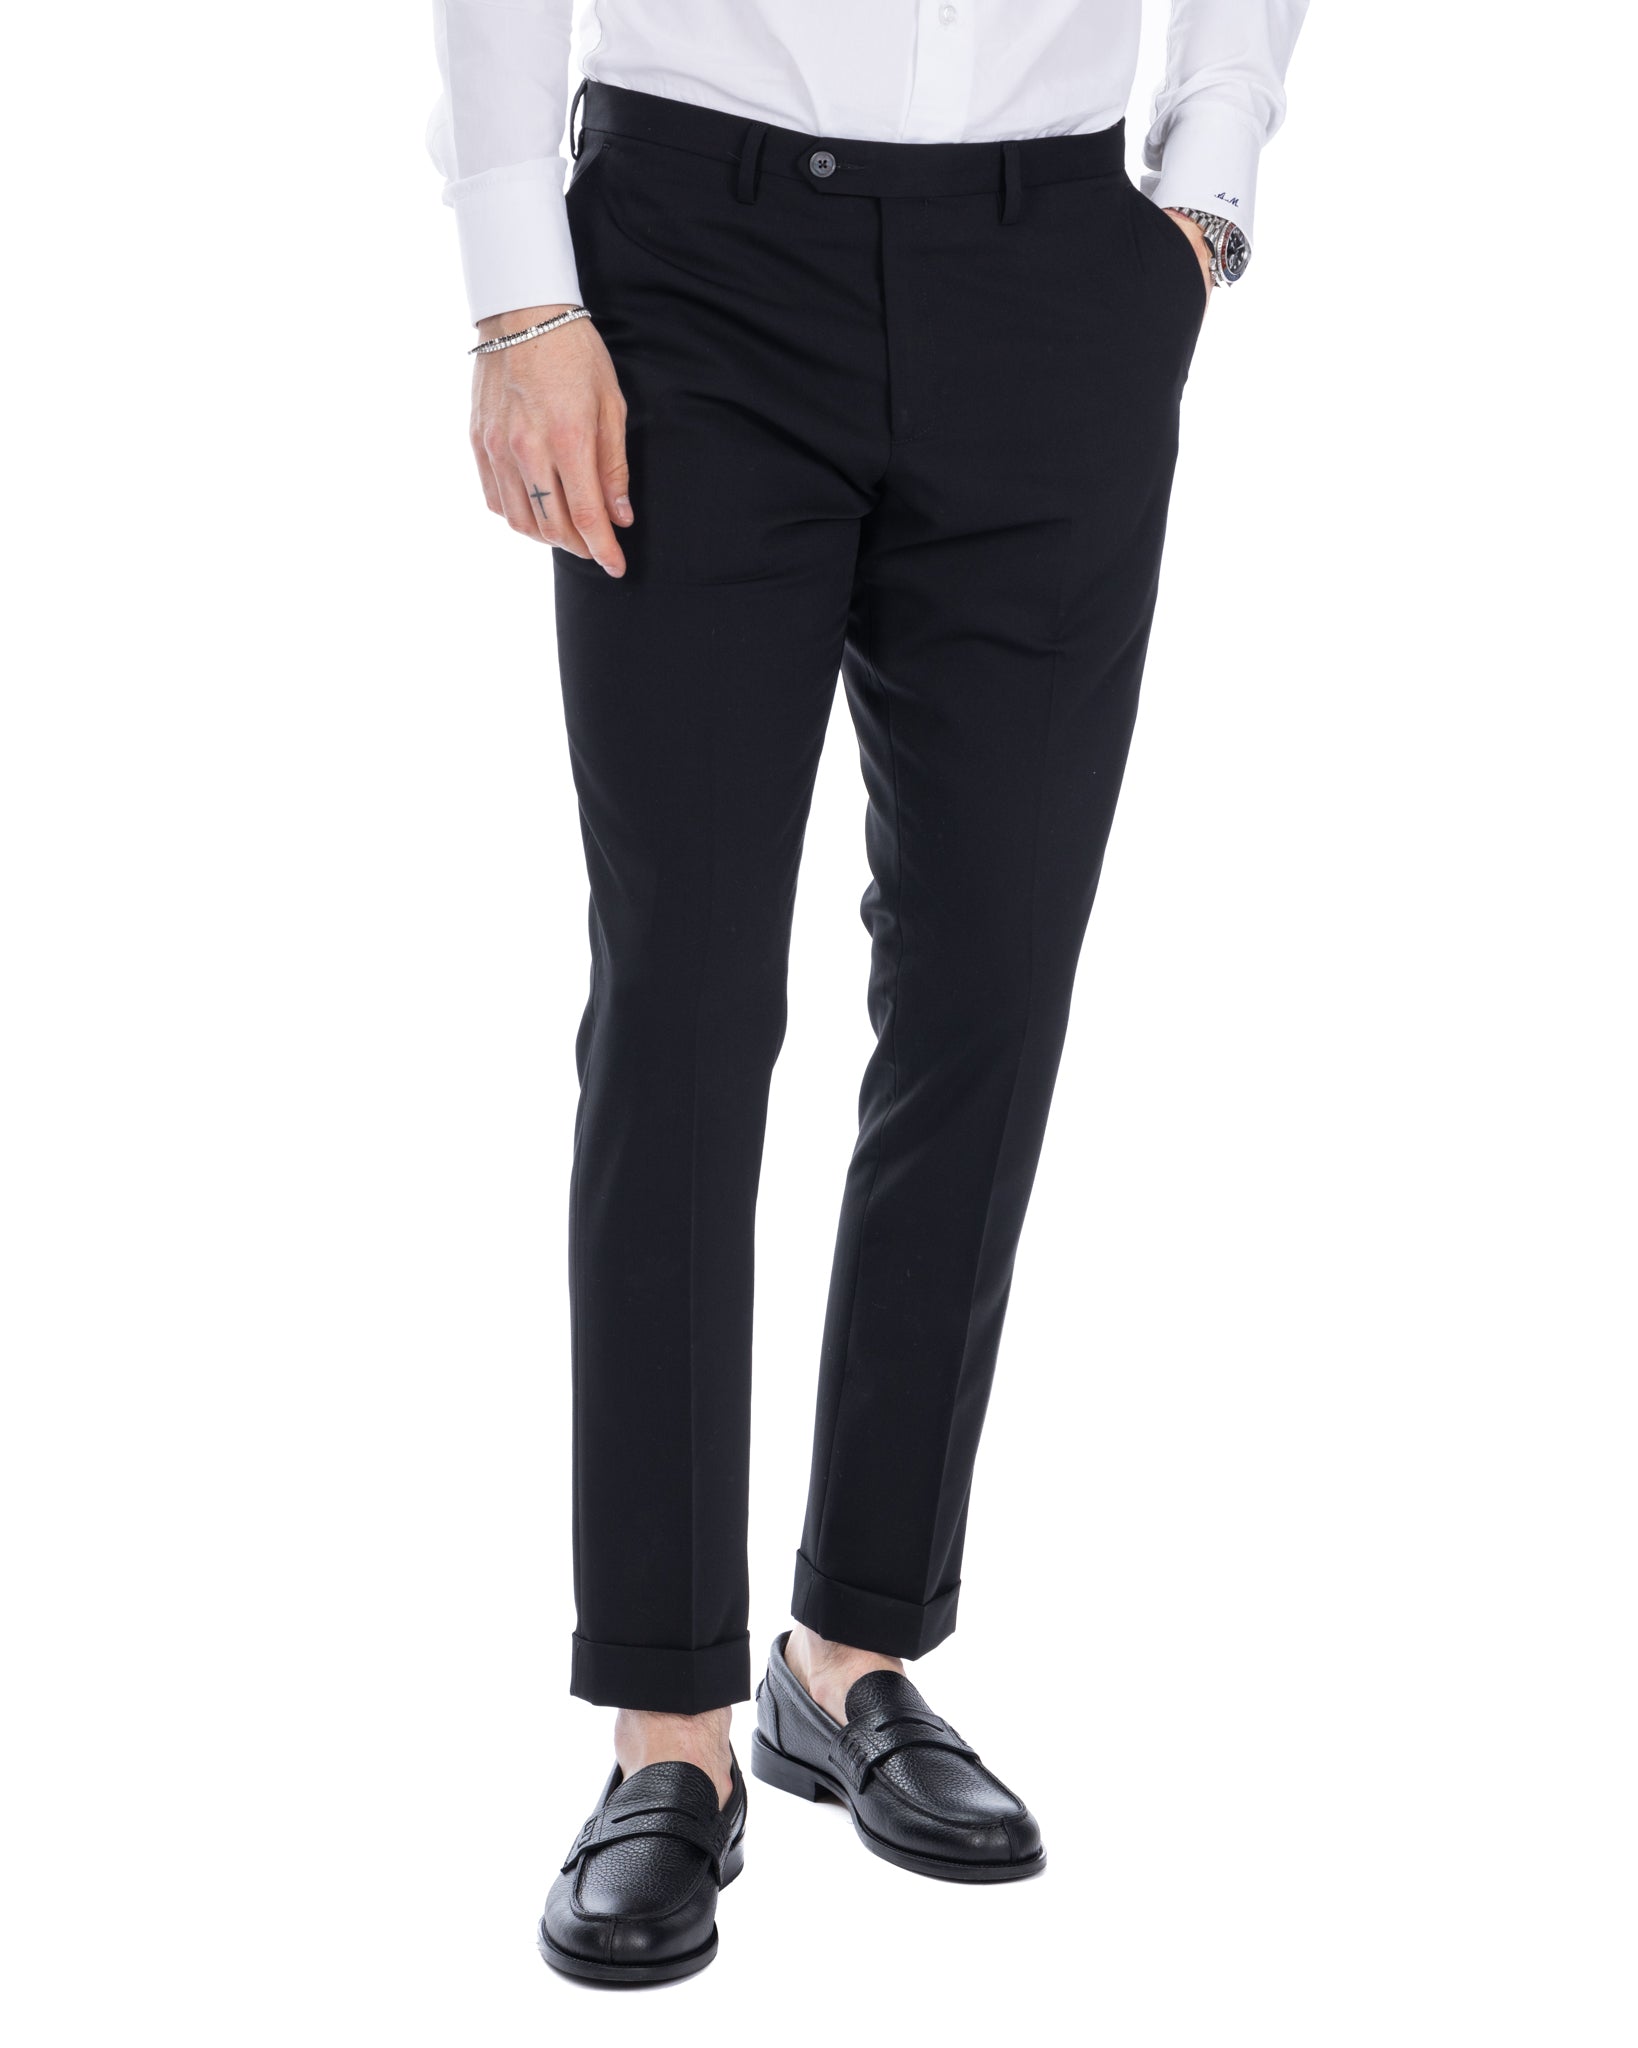 Brema - black basic trousers